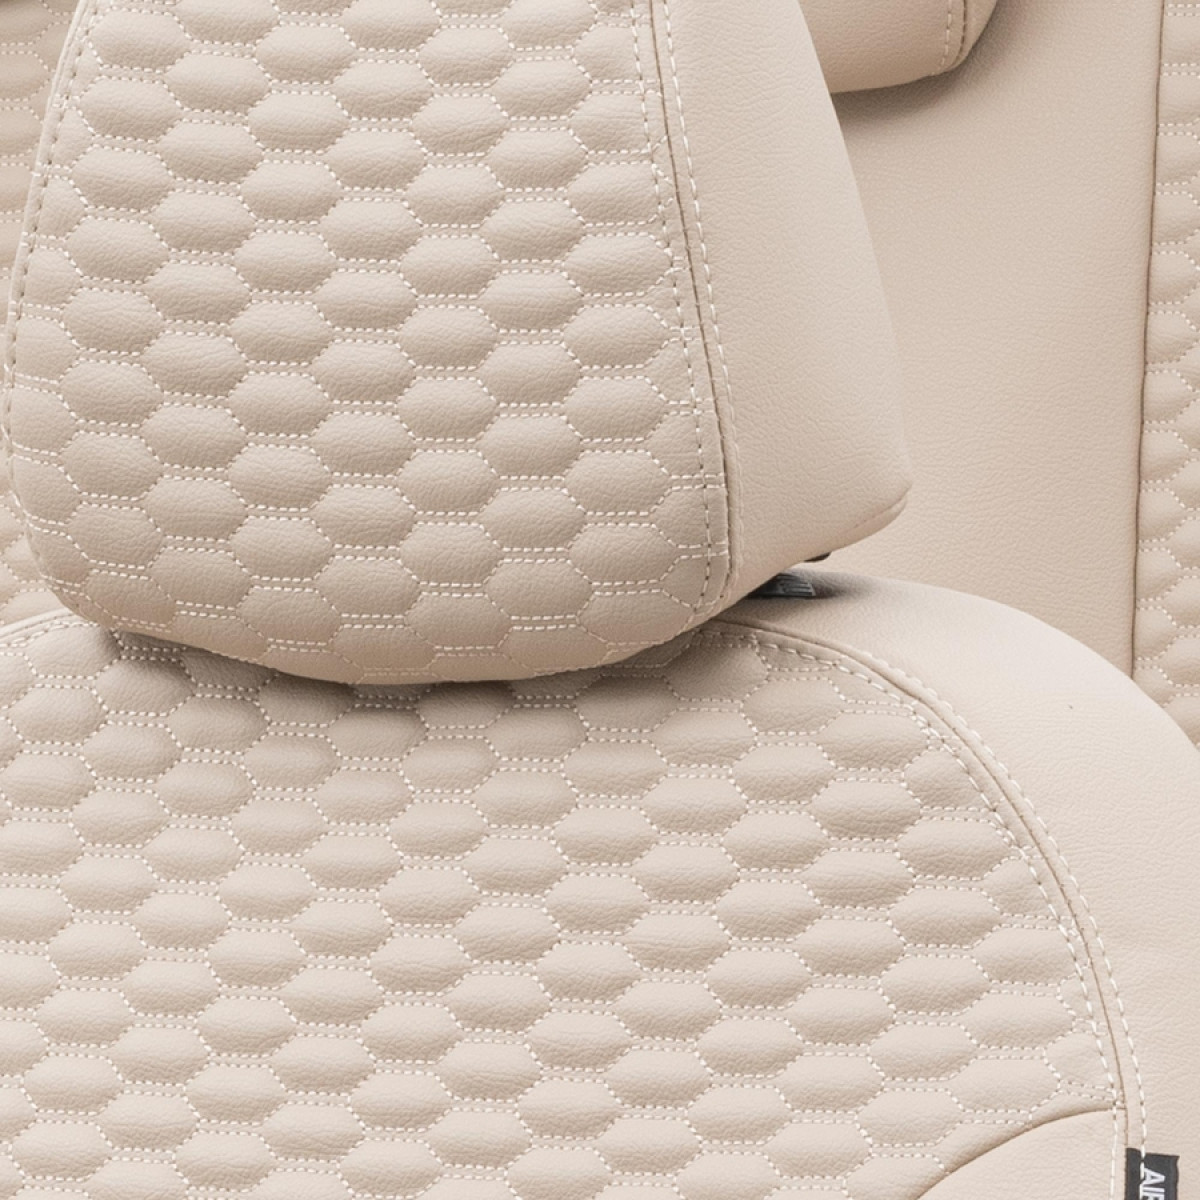 Tokyo seat covers (eco leather) Volvo XC60 I